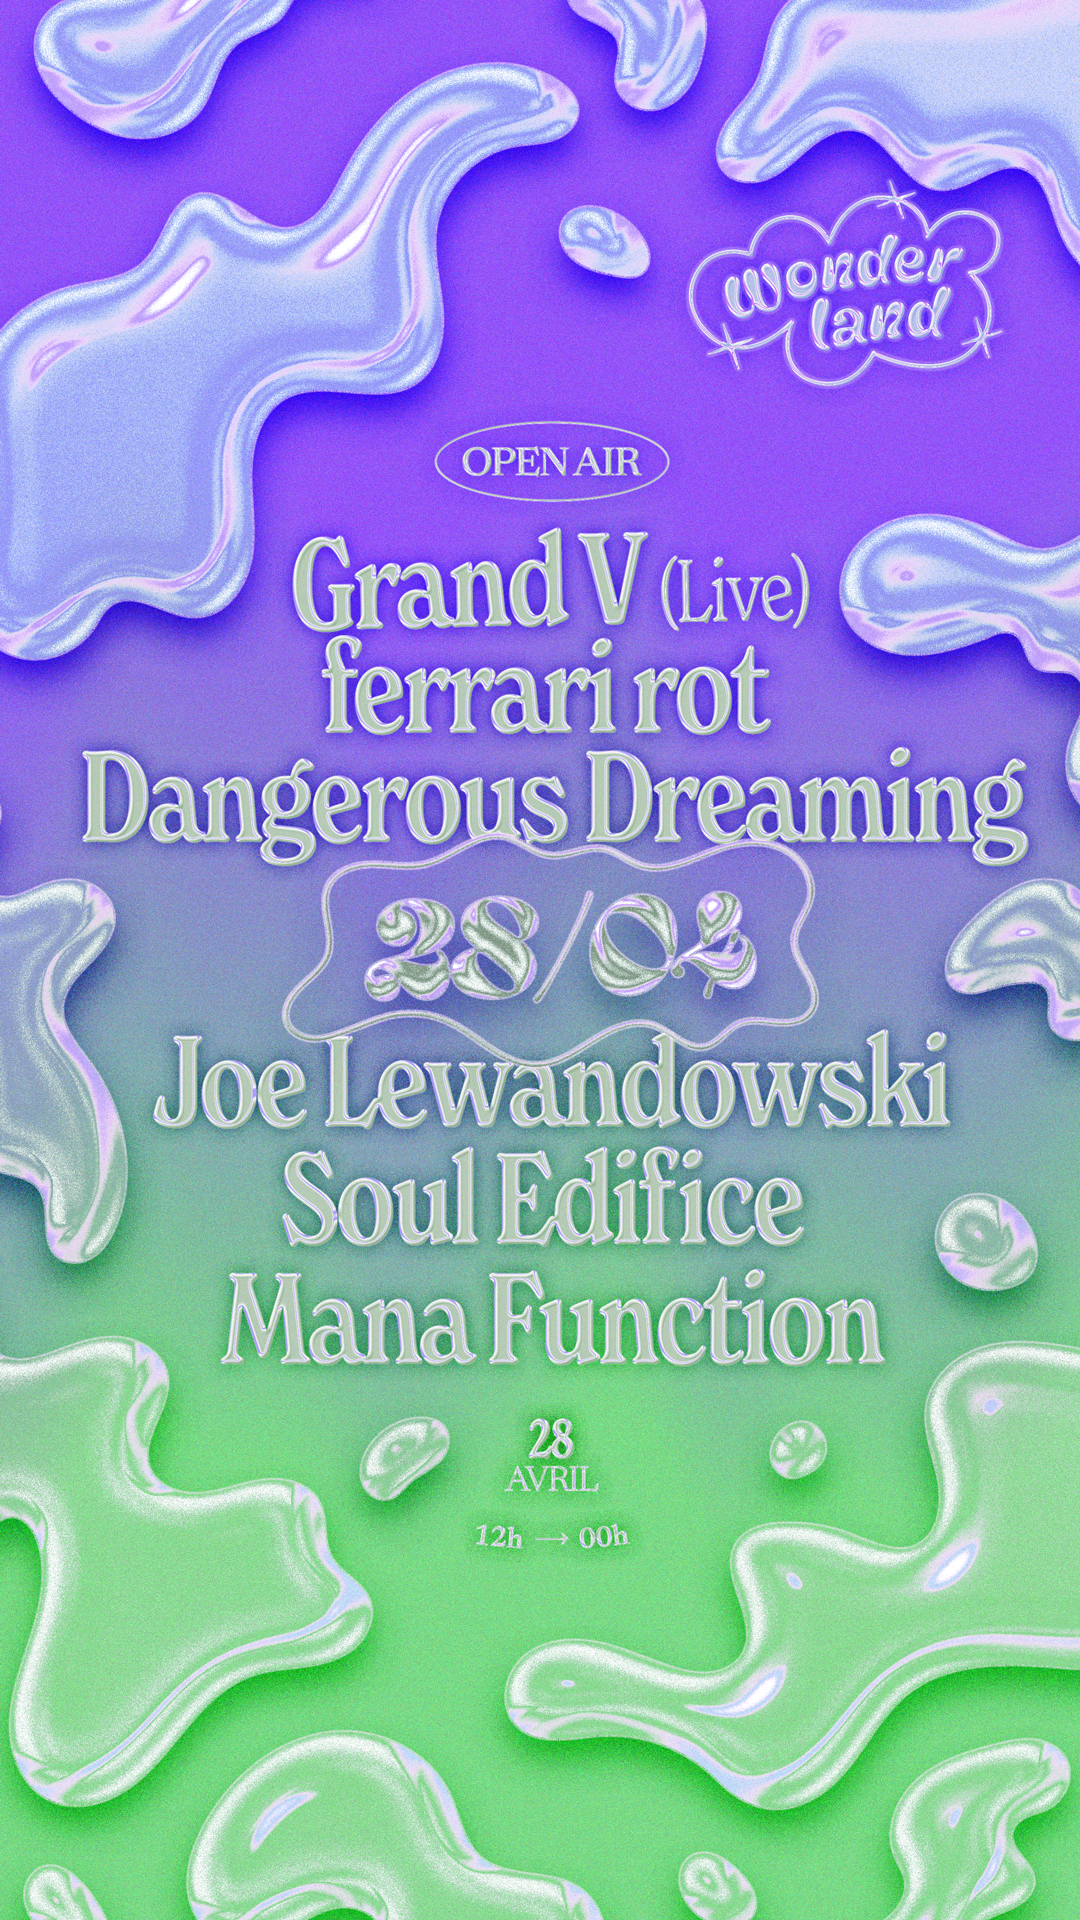 Wonderland invite: Grand V (LIVE) - ferrari rot - dangerous dreaming - フライヤー裏